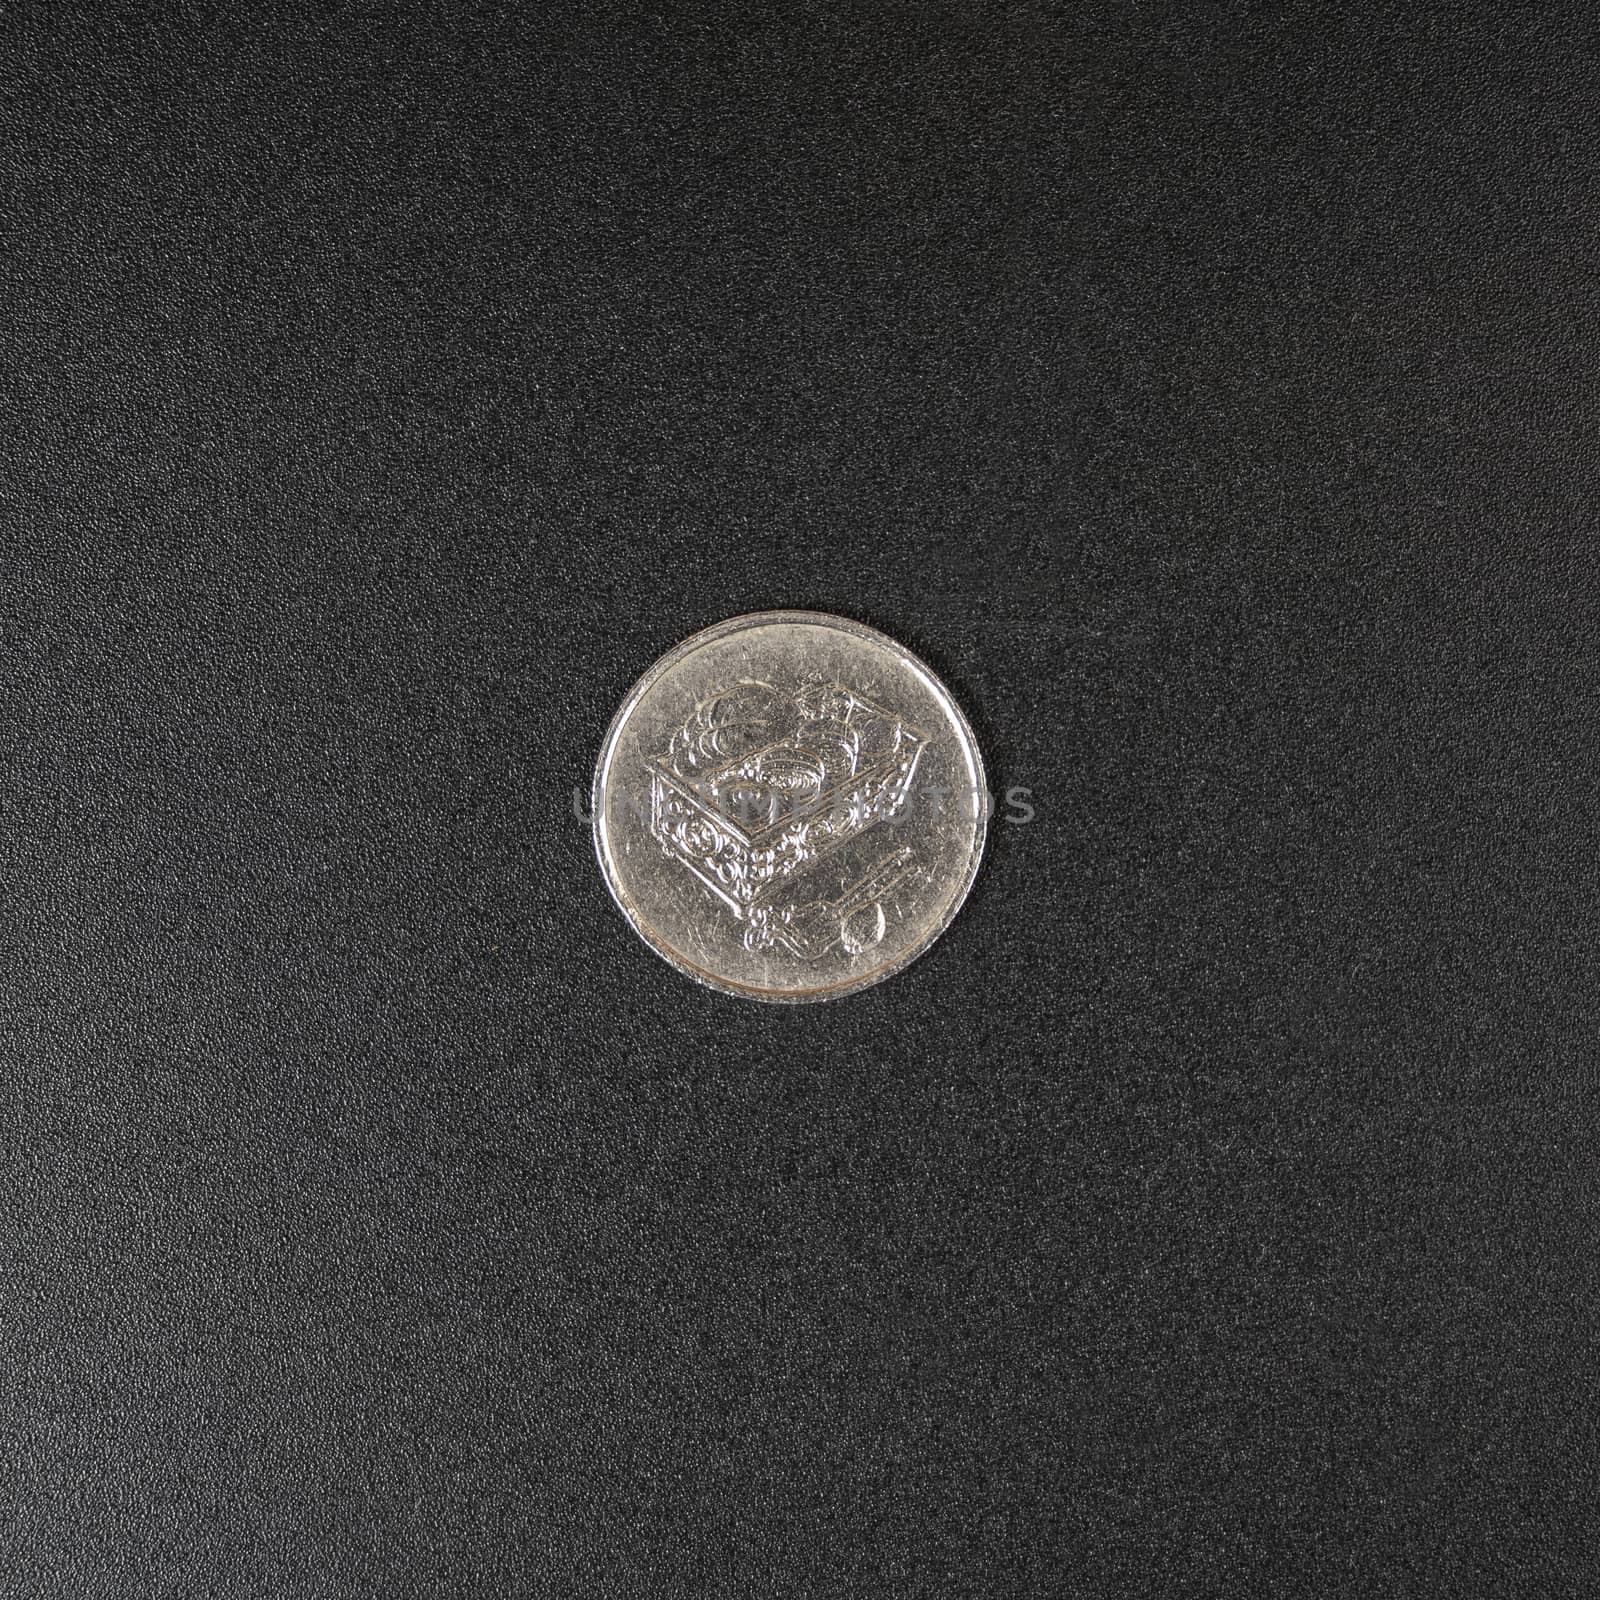 A 20 Sen coin of Malaysian Ringgit